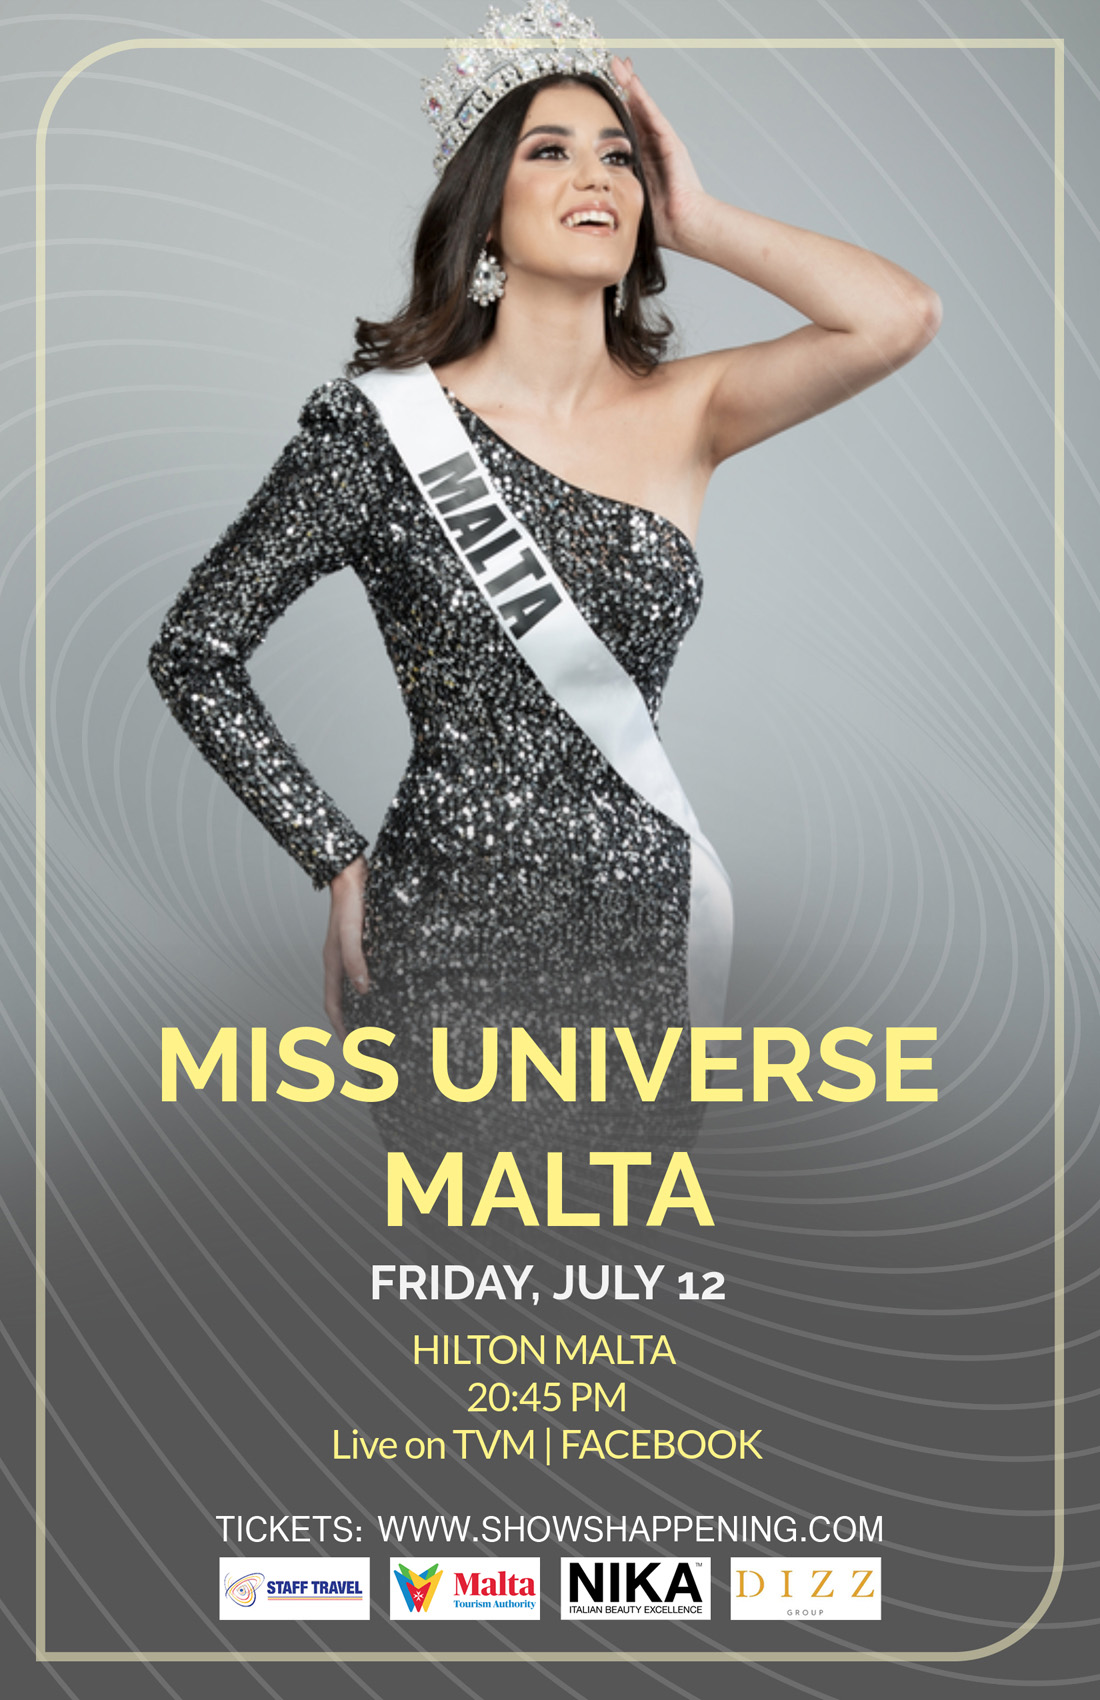 Miss Universe Malta 2019 poster